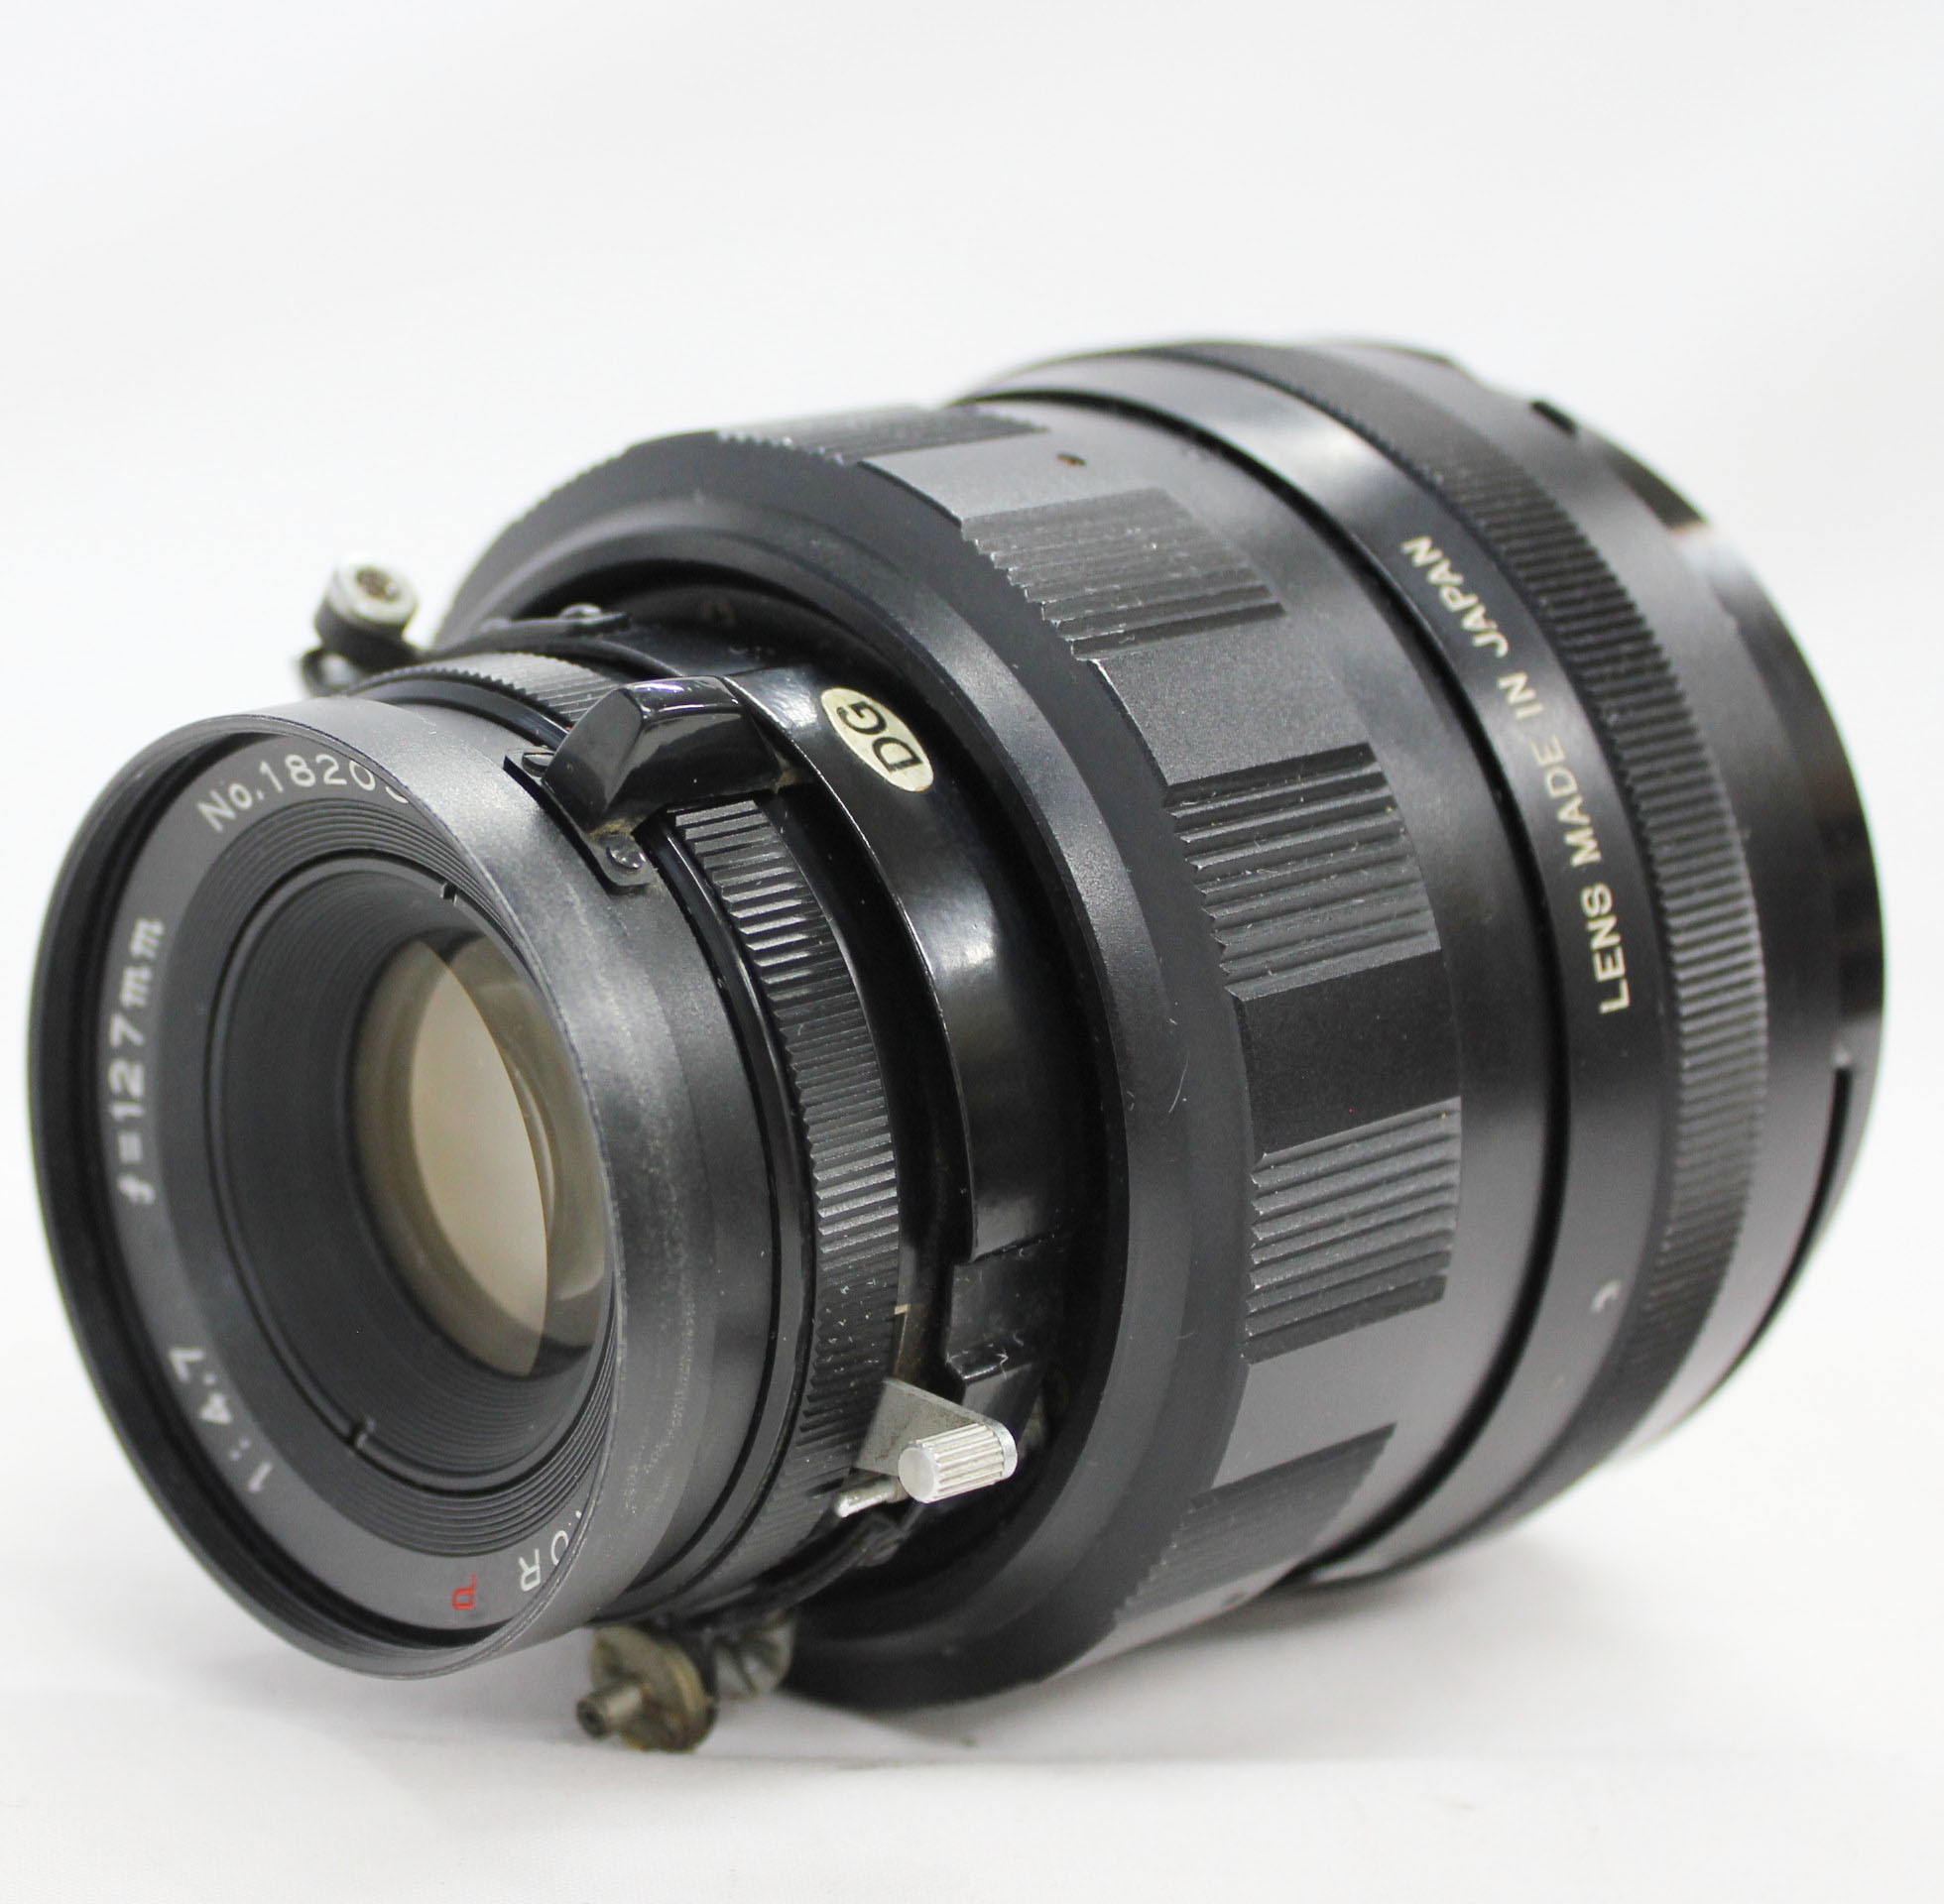  Mamiya-Sekor P 127mm F/4.7 Lens for Universal Press Super 23 from Japan Photo 1